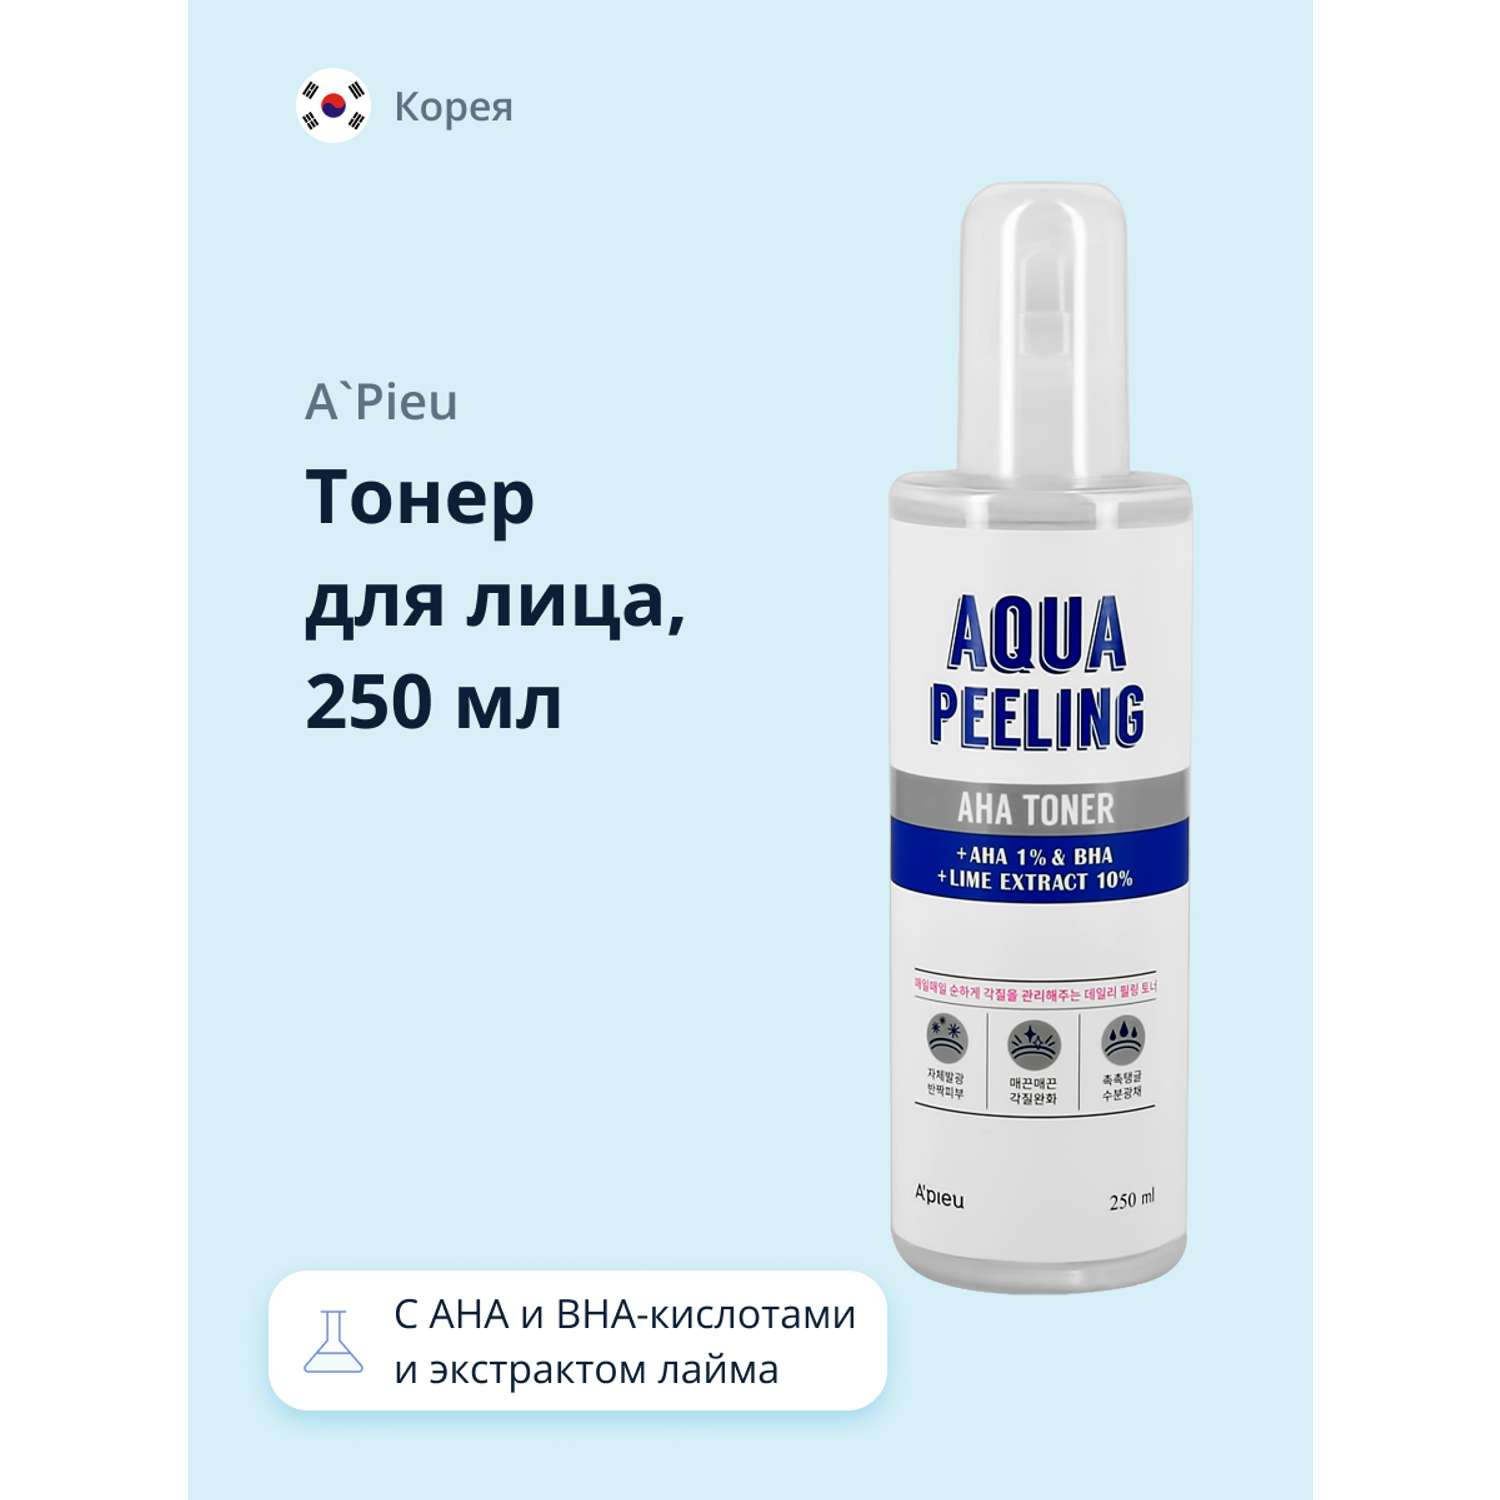 Тонер для лица APieu Aqua peeling с aha и bha-кислотами и экстрактом лайма 250 мл - фото 3